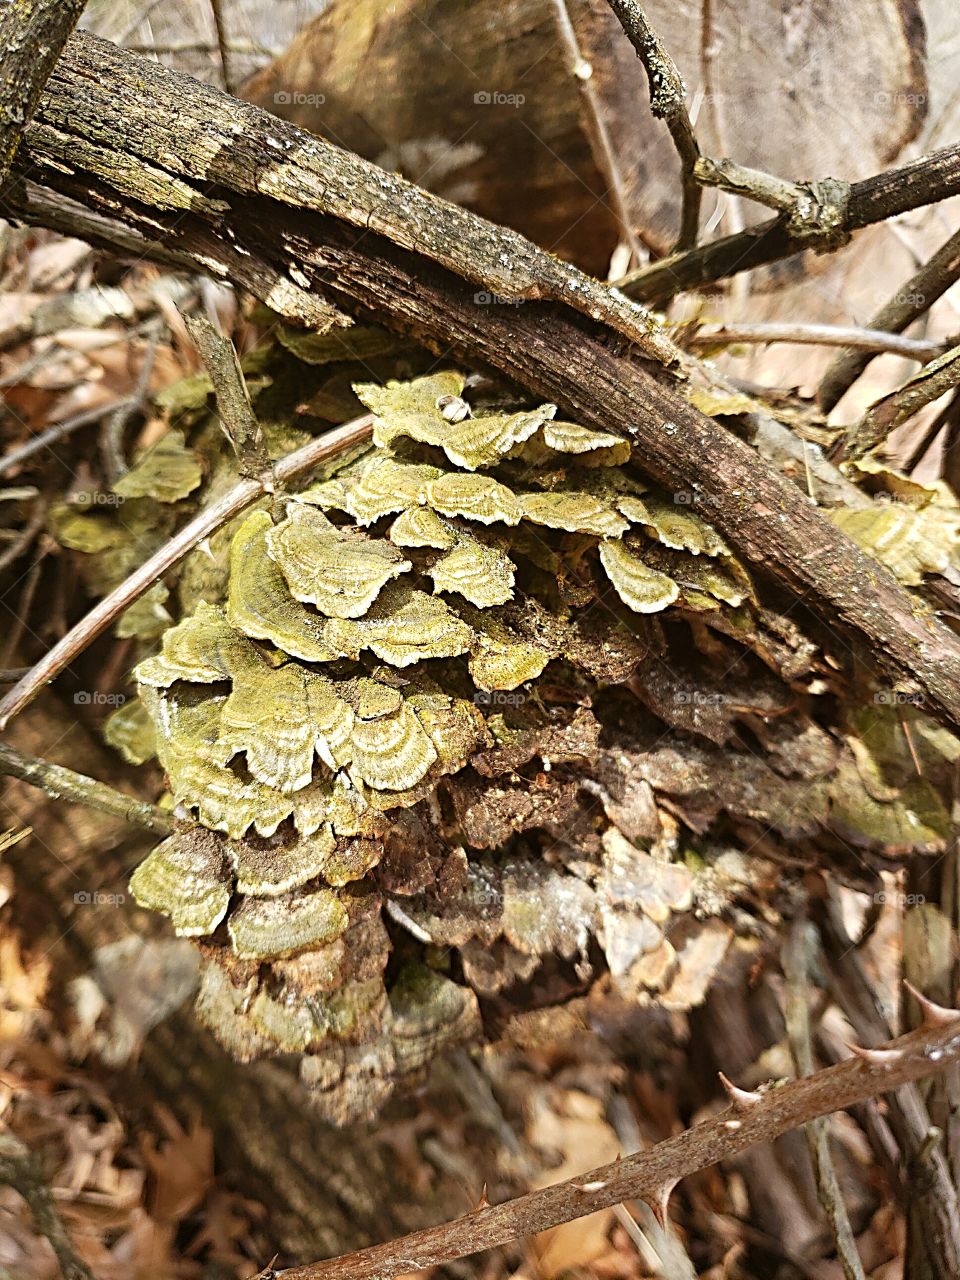 moss growing on a rotting log